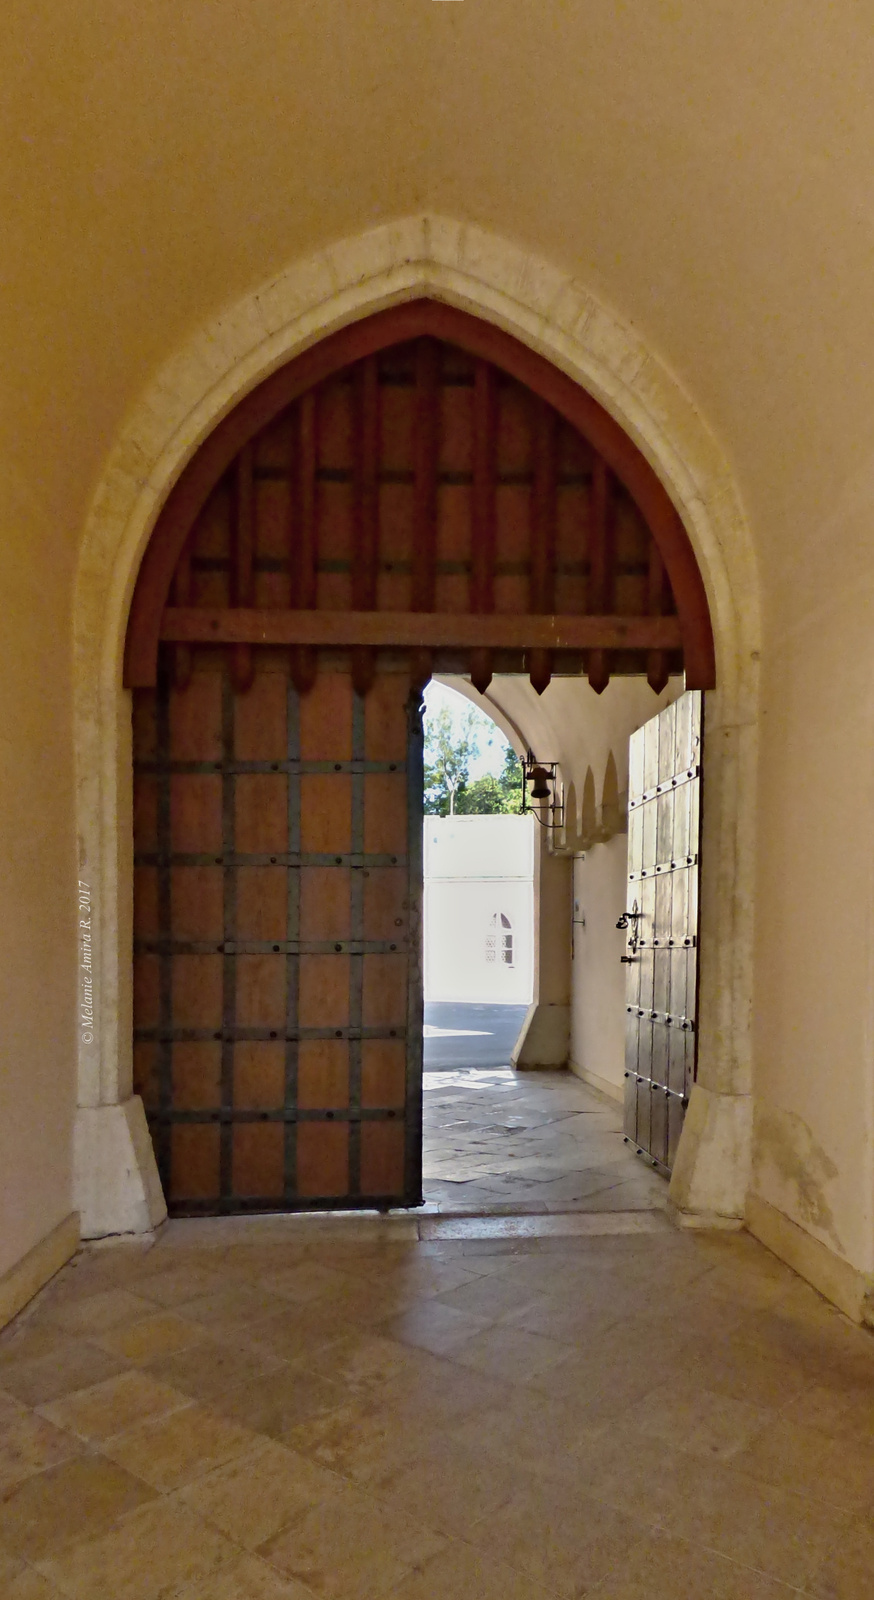 Franzensburg belépő kapuja